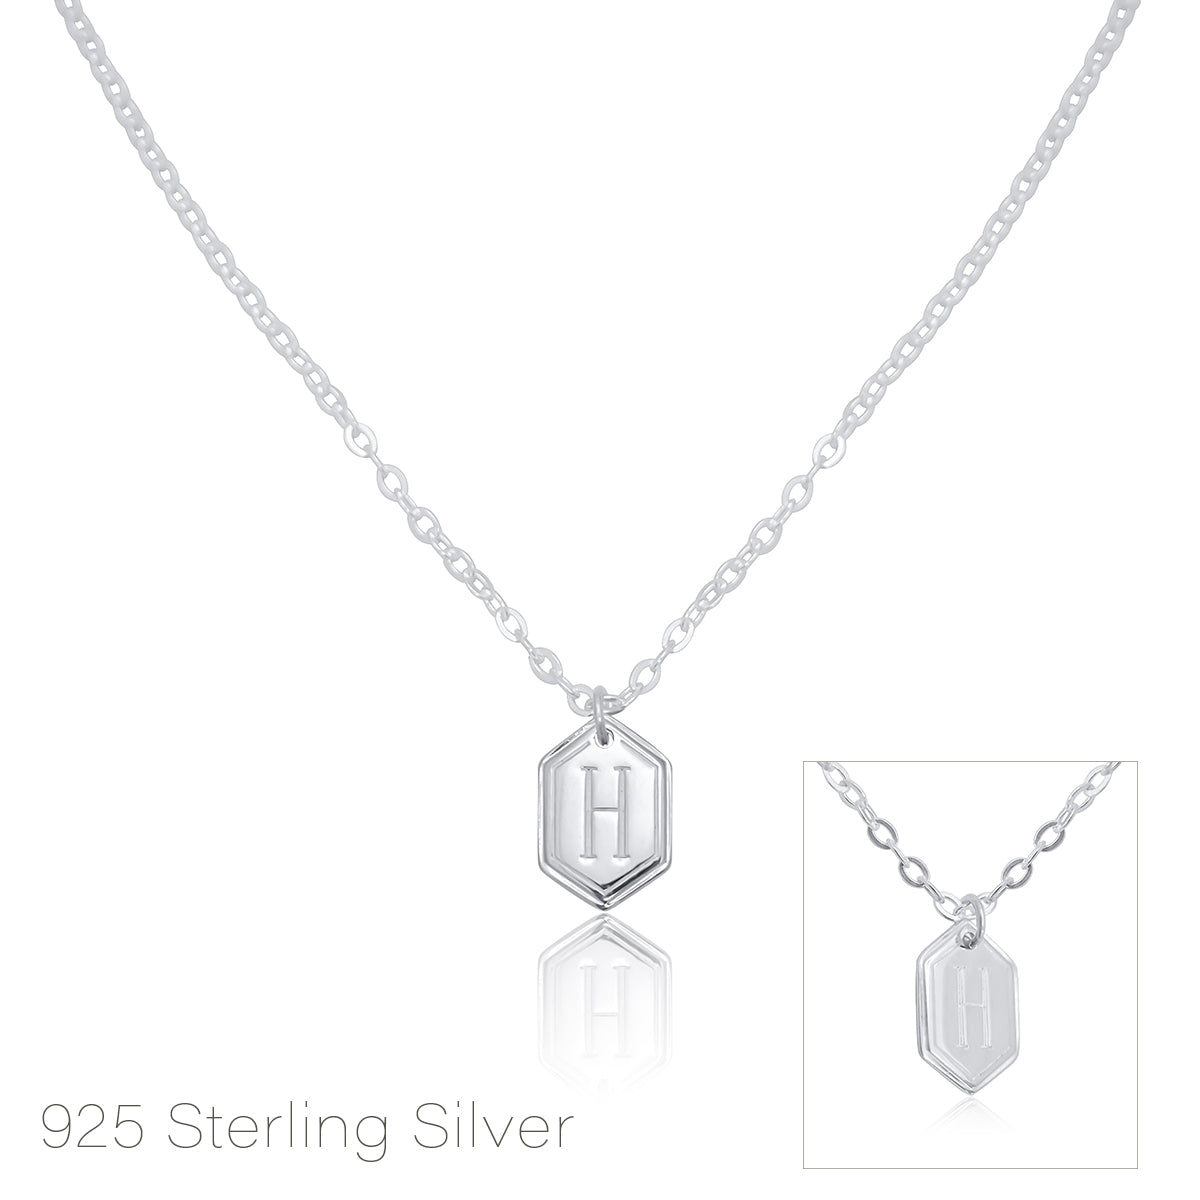 EFYTAL 18th Birthday Gifts for Girls, 925 Sterling Silver Bracelet